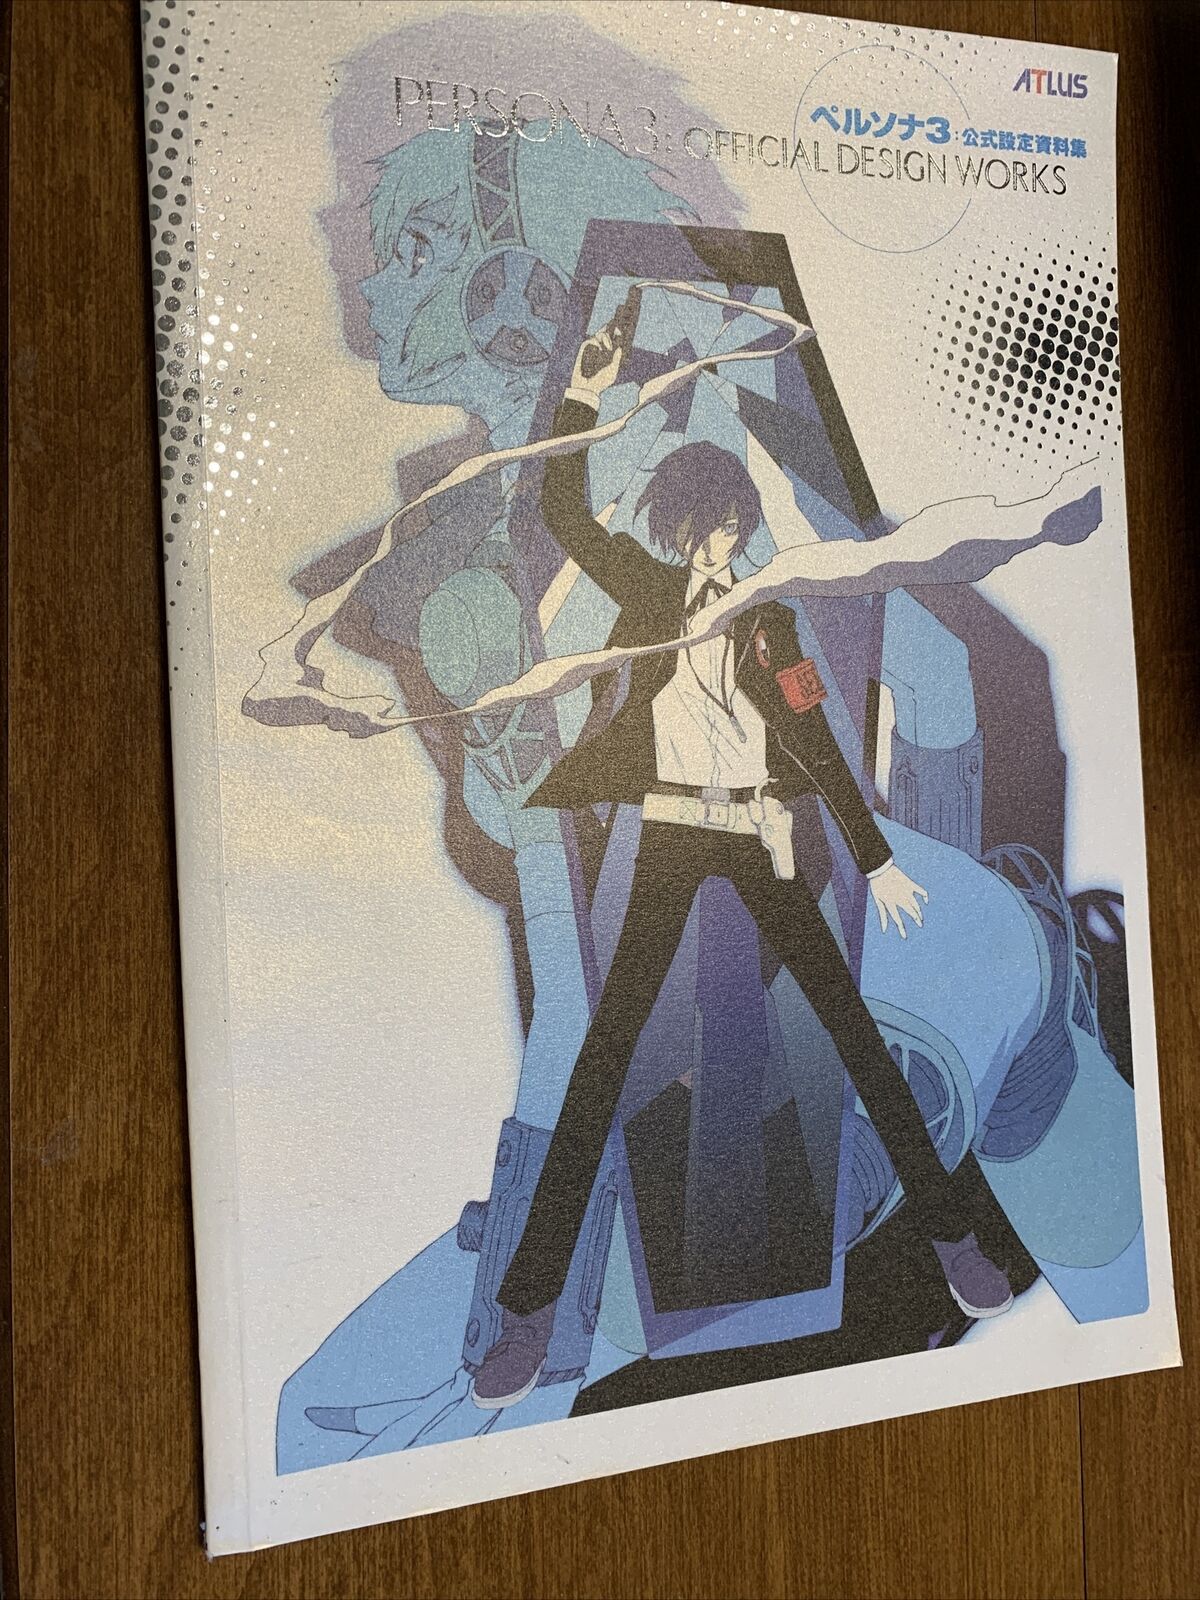 Persona 3: Official Design Works English Version Shigenori Soejima Art Book